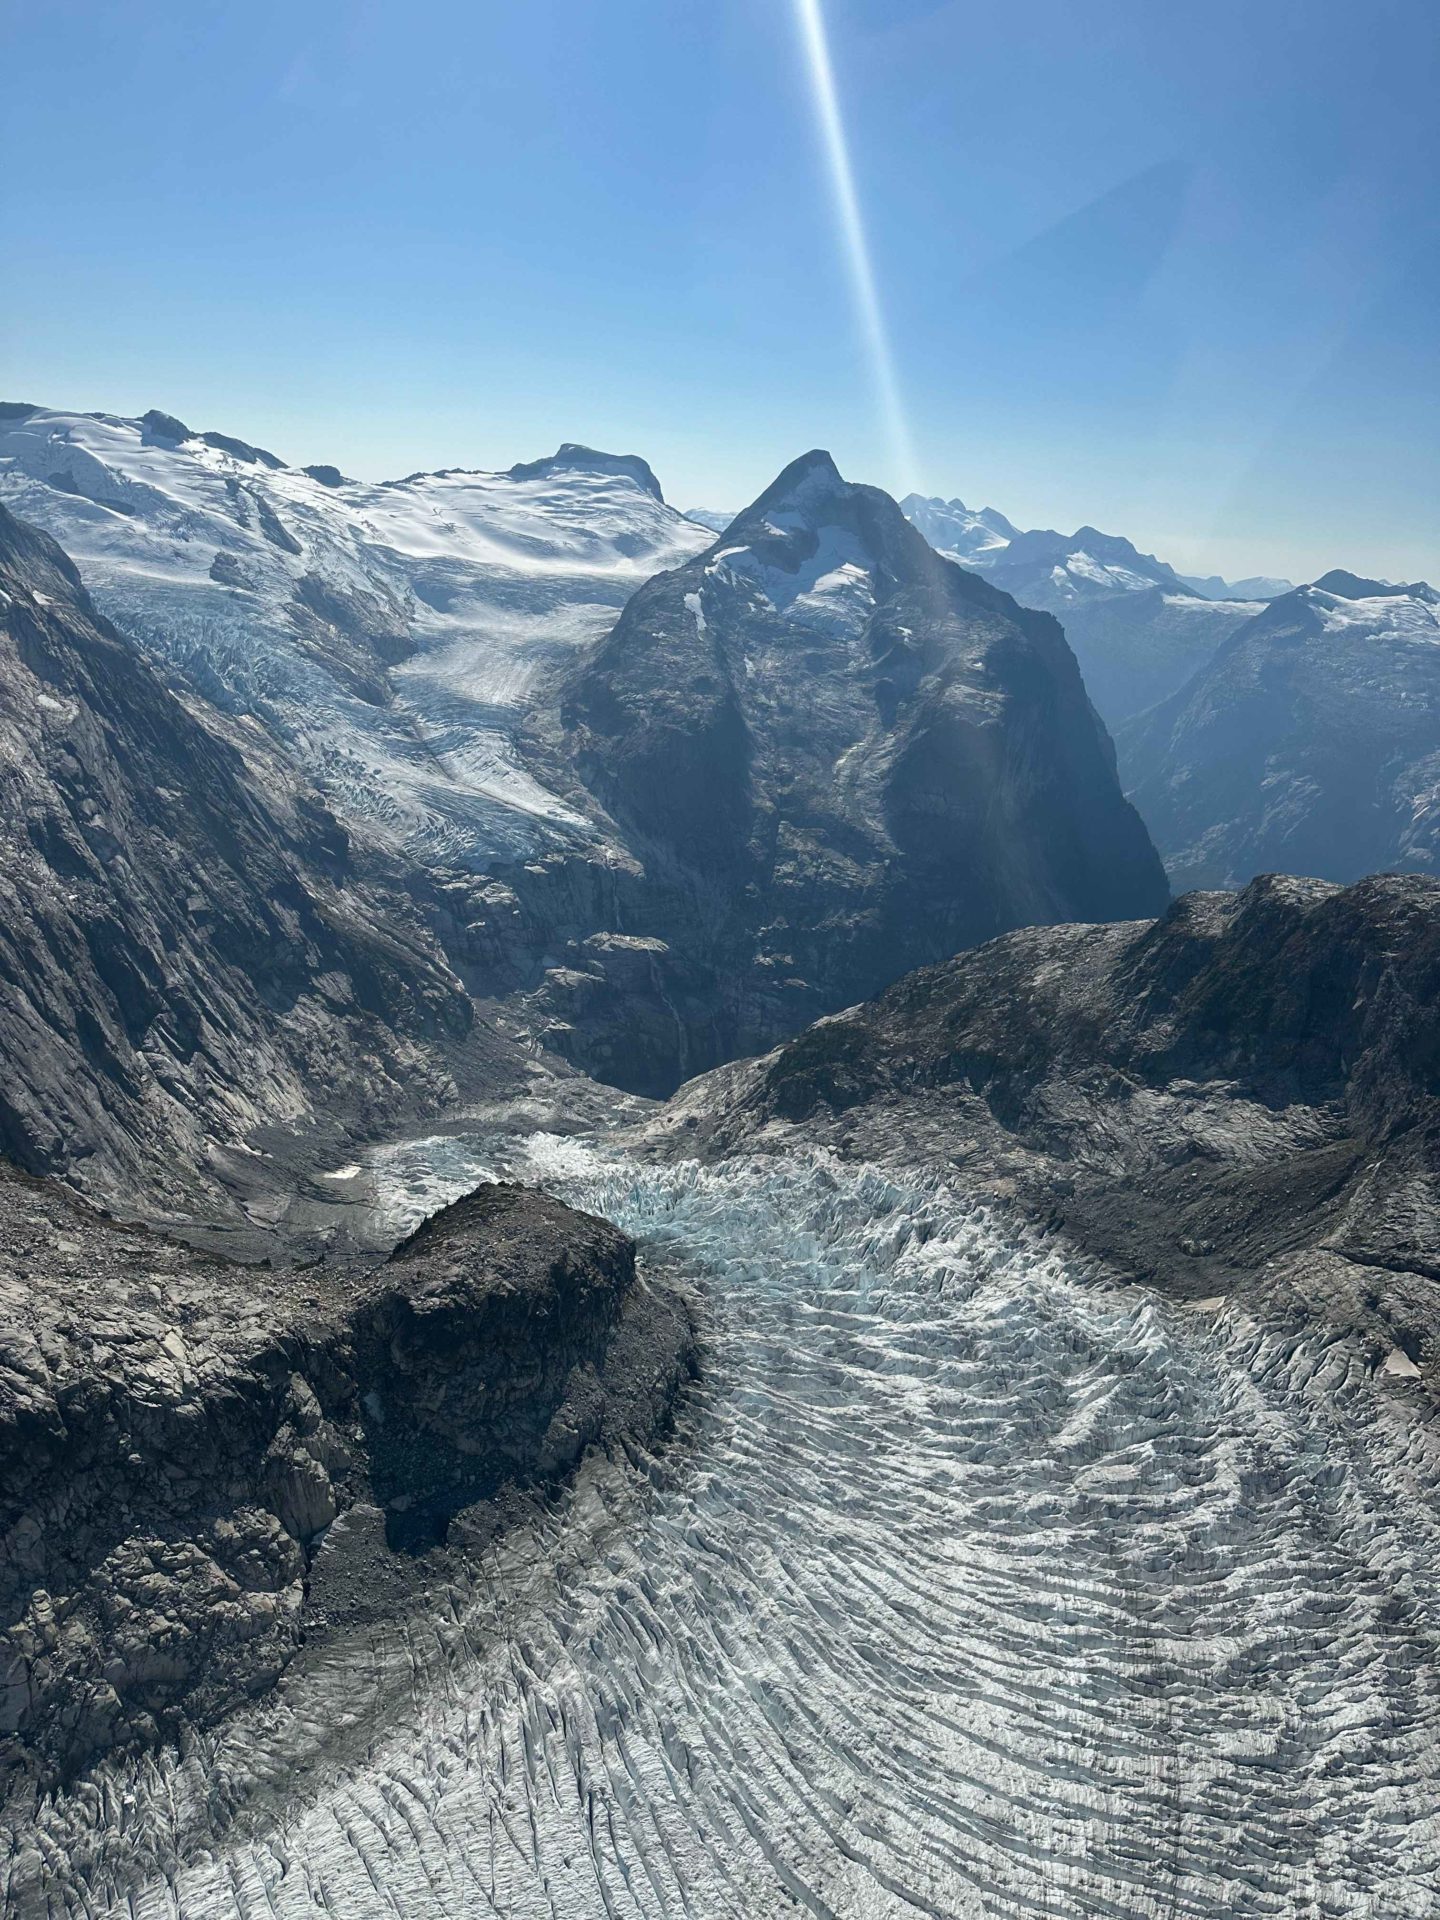 A glacier in the Rockies, Canada - Canada Road Trip Itinerary